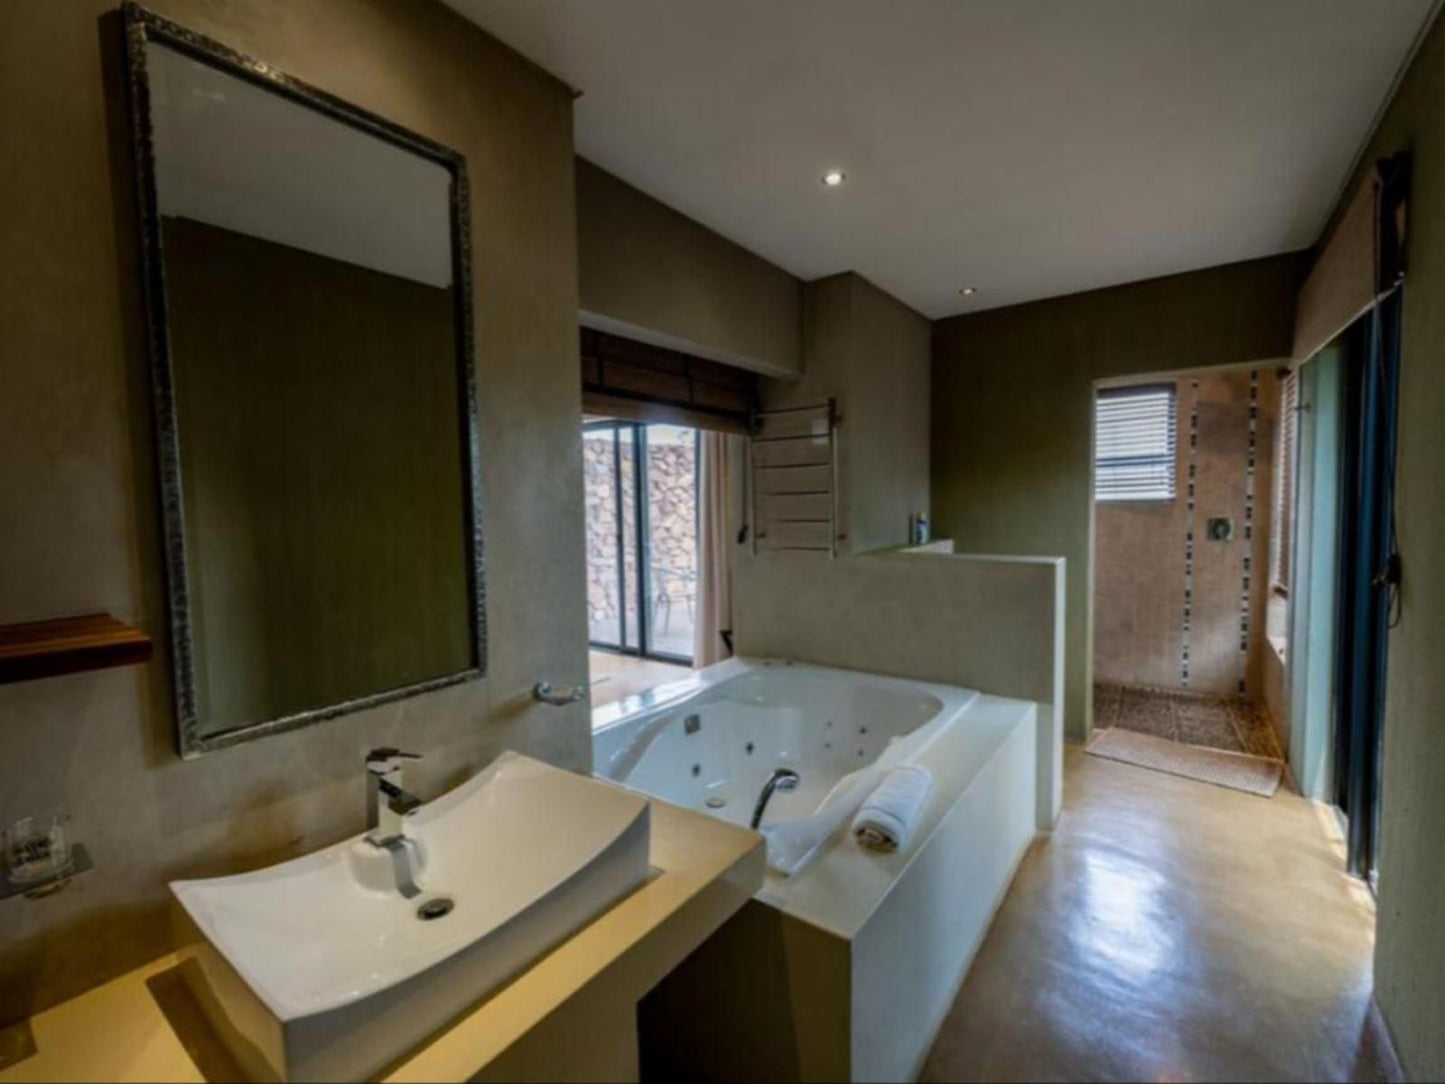 Silver Streams Modimolle Modimolle Nylstroom Limpopo Province South Africa Bathroom